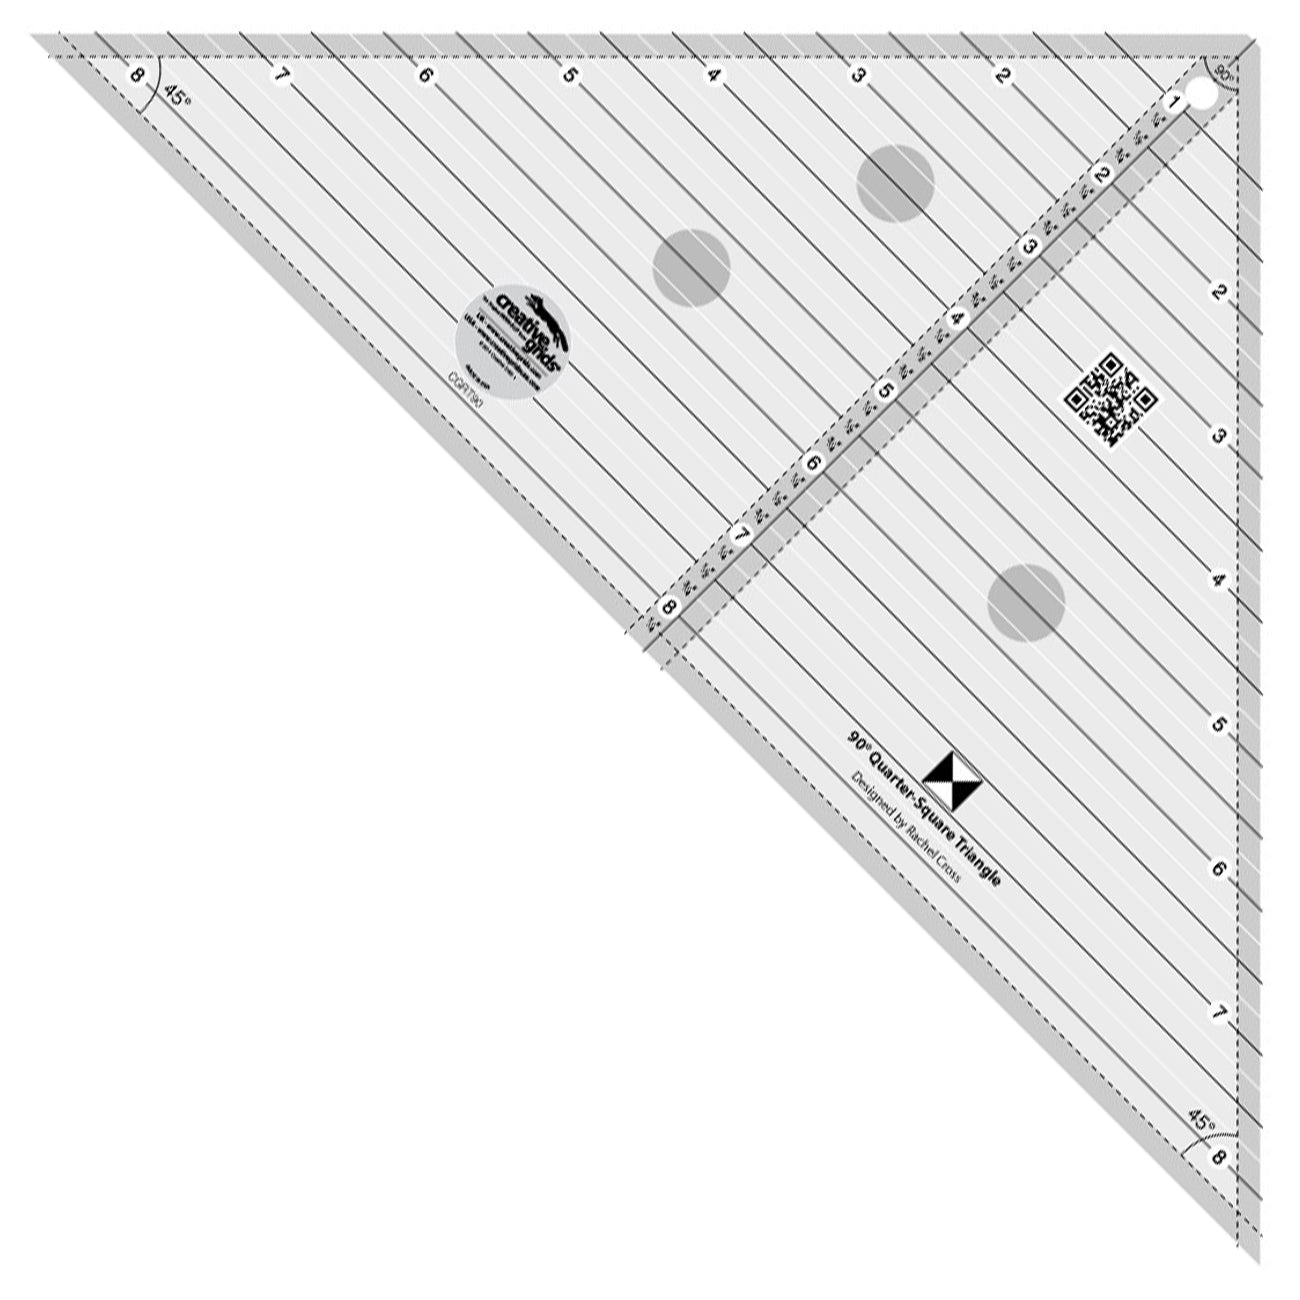 Creative Grids Multi-Size 45 & 90 Triangle Ruler